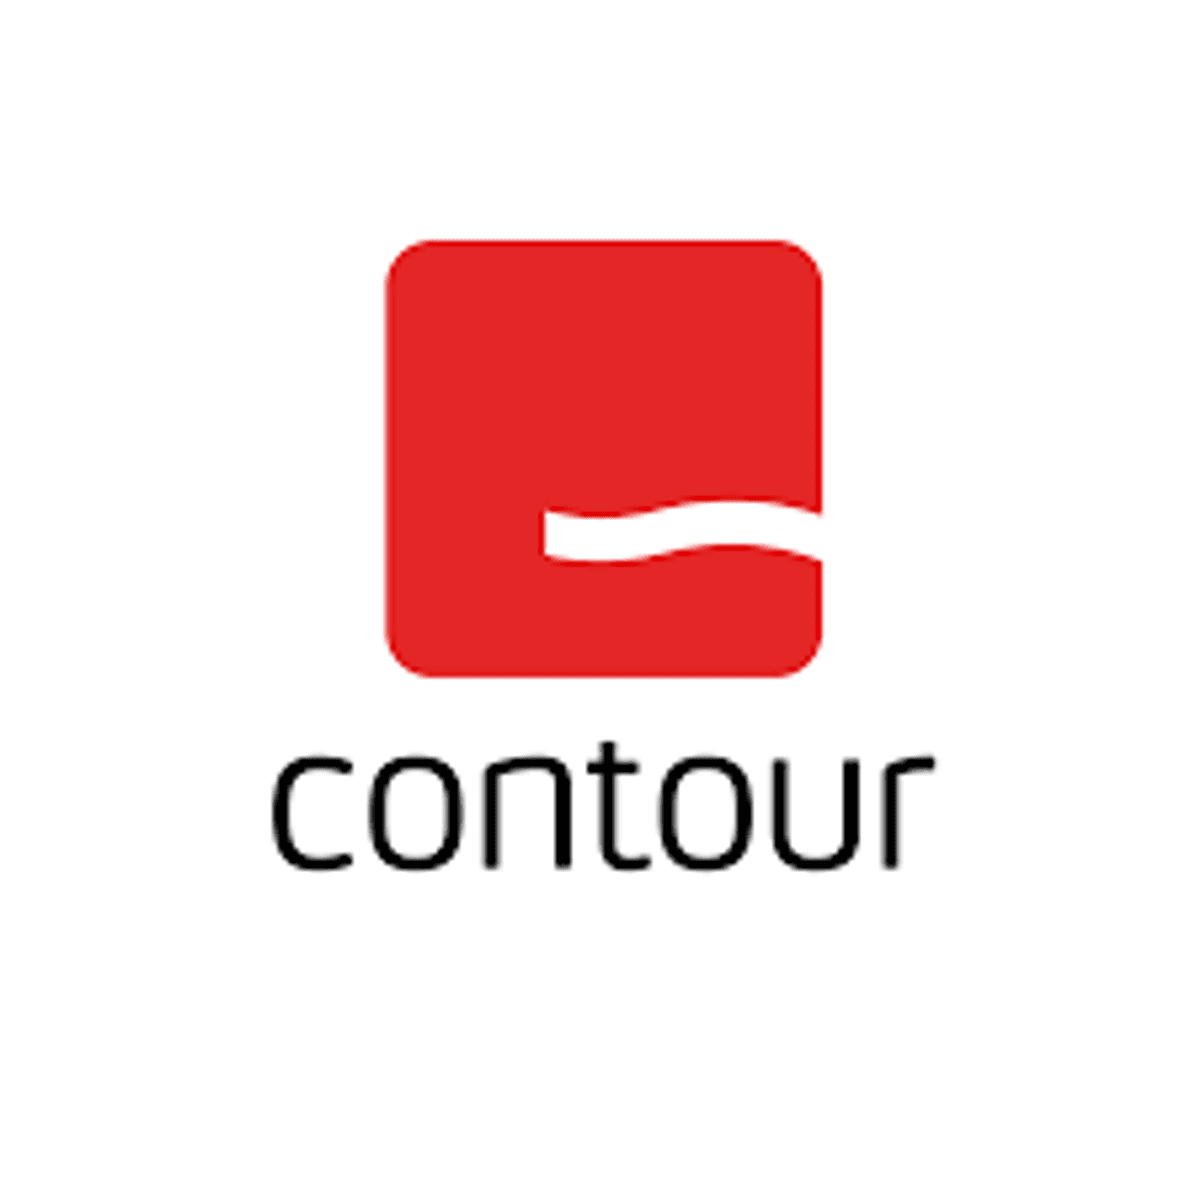 Contour Design benoemt Kenneth Nielsen als nieuwe CEO image